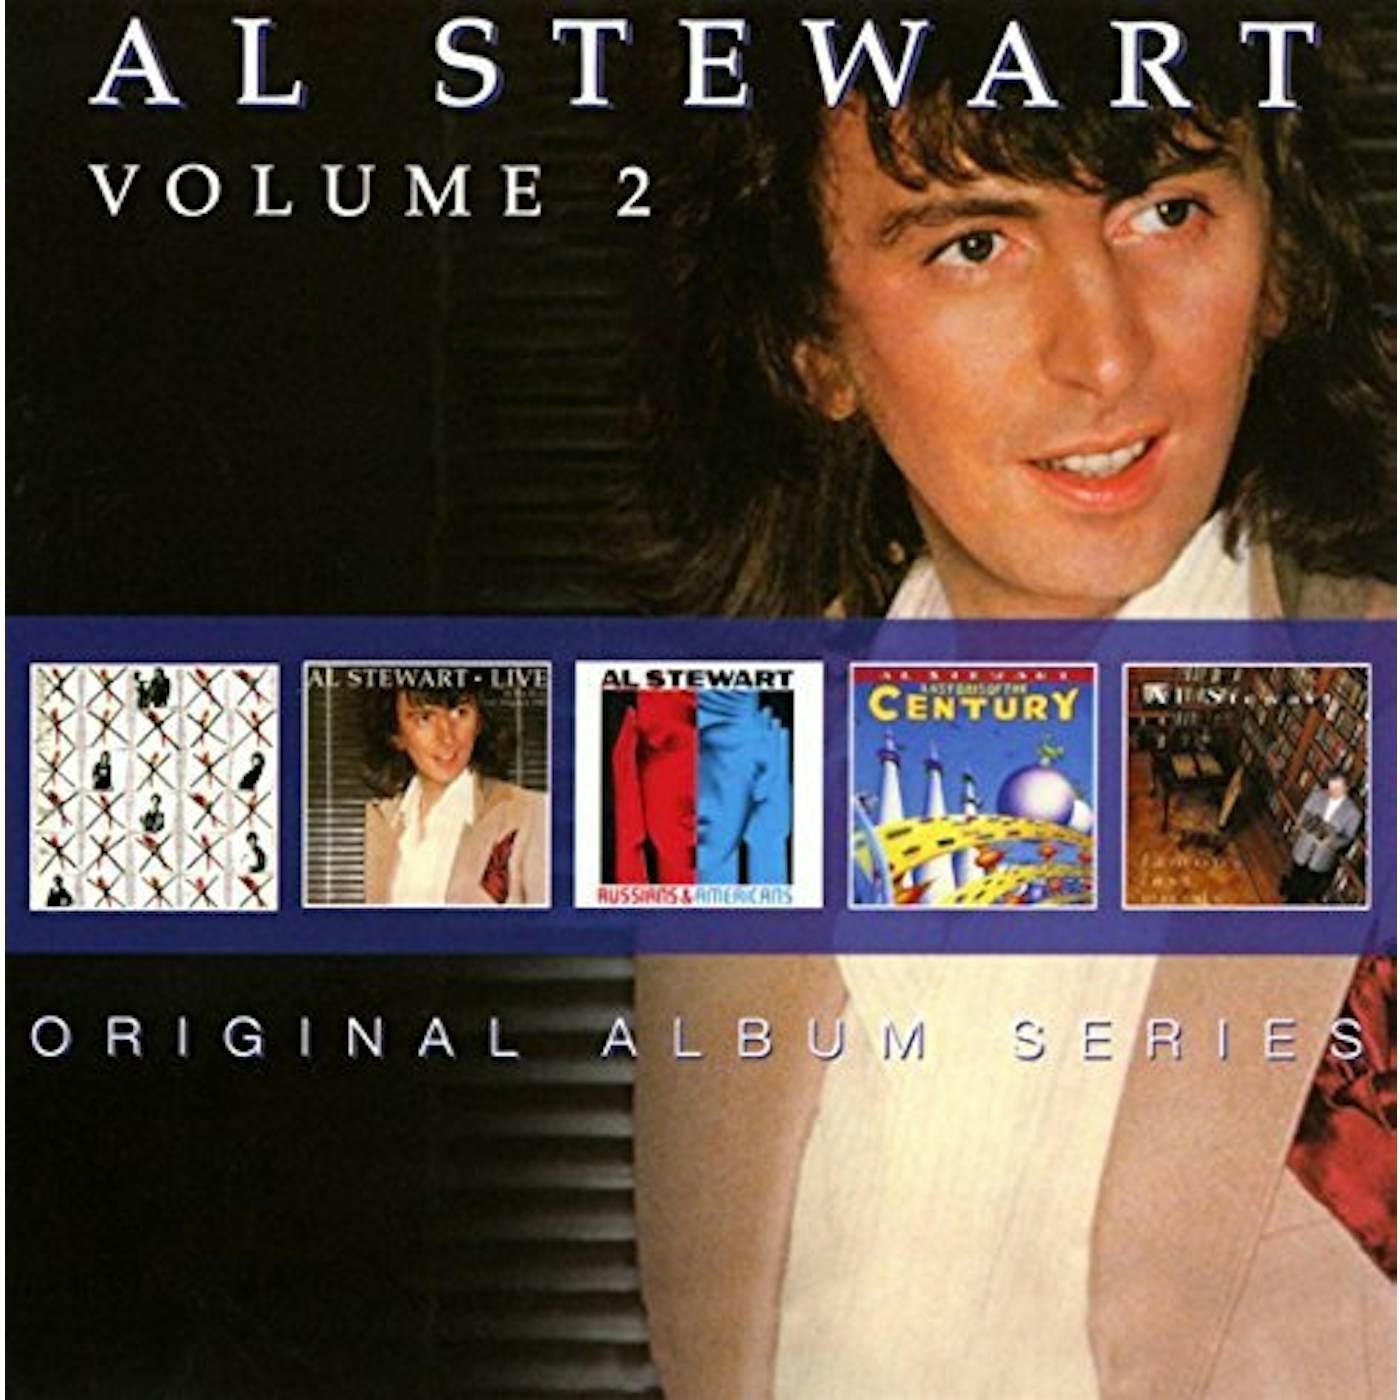 Al Stewart ORIGINAL ALBUM SERIES CD